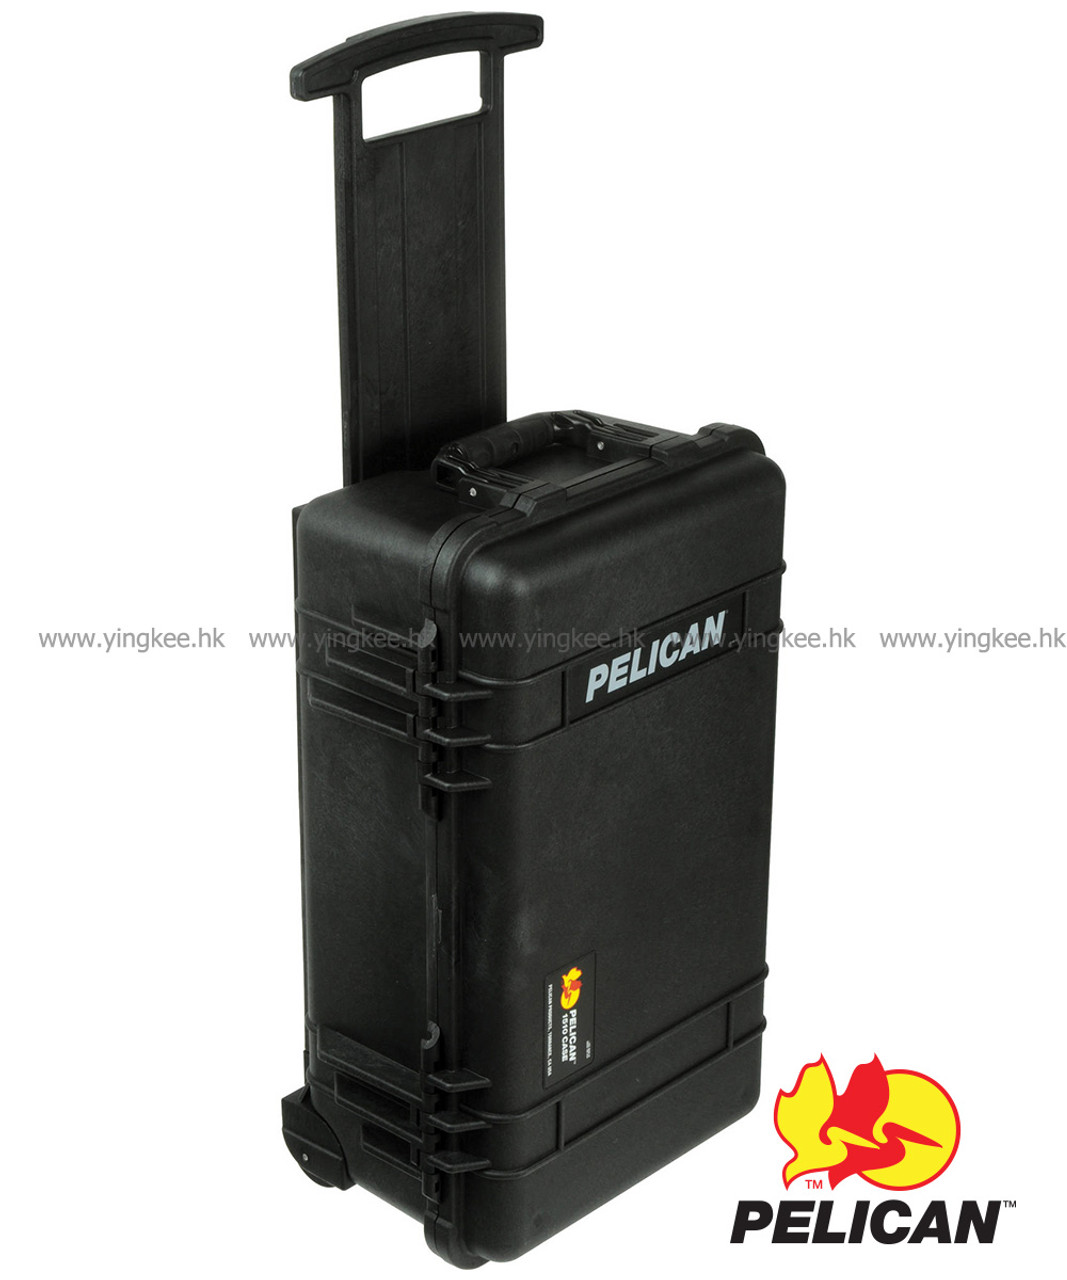 Pelican 1510 Carry On Case 黑色攝影器材安全箱